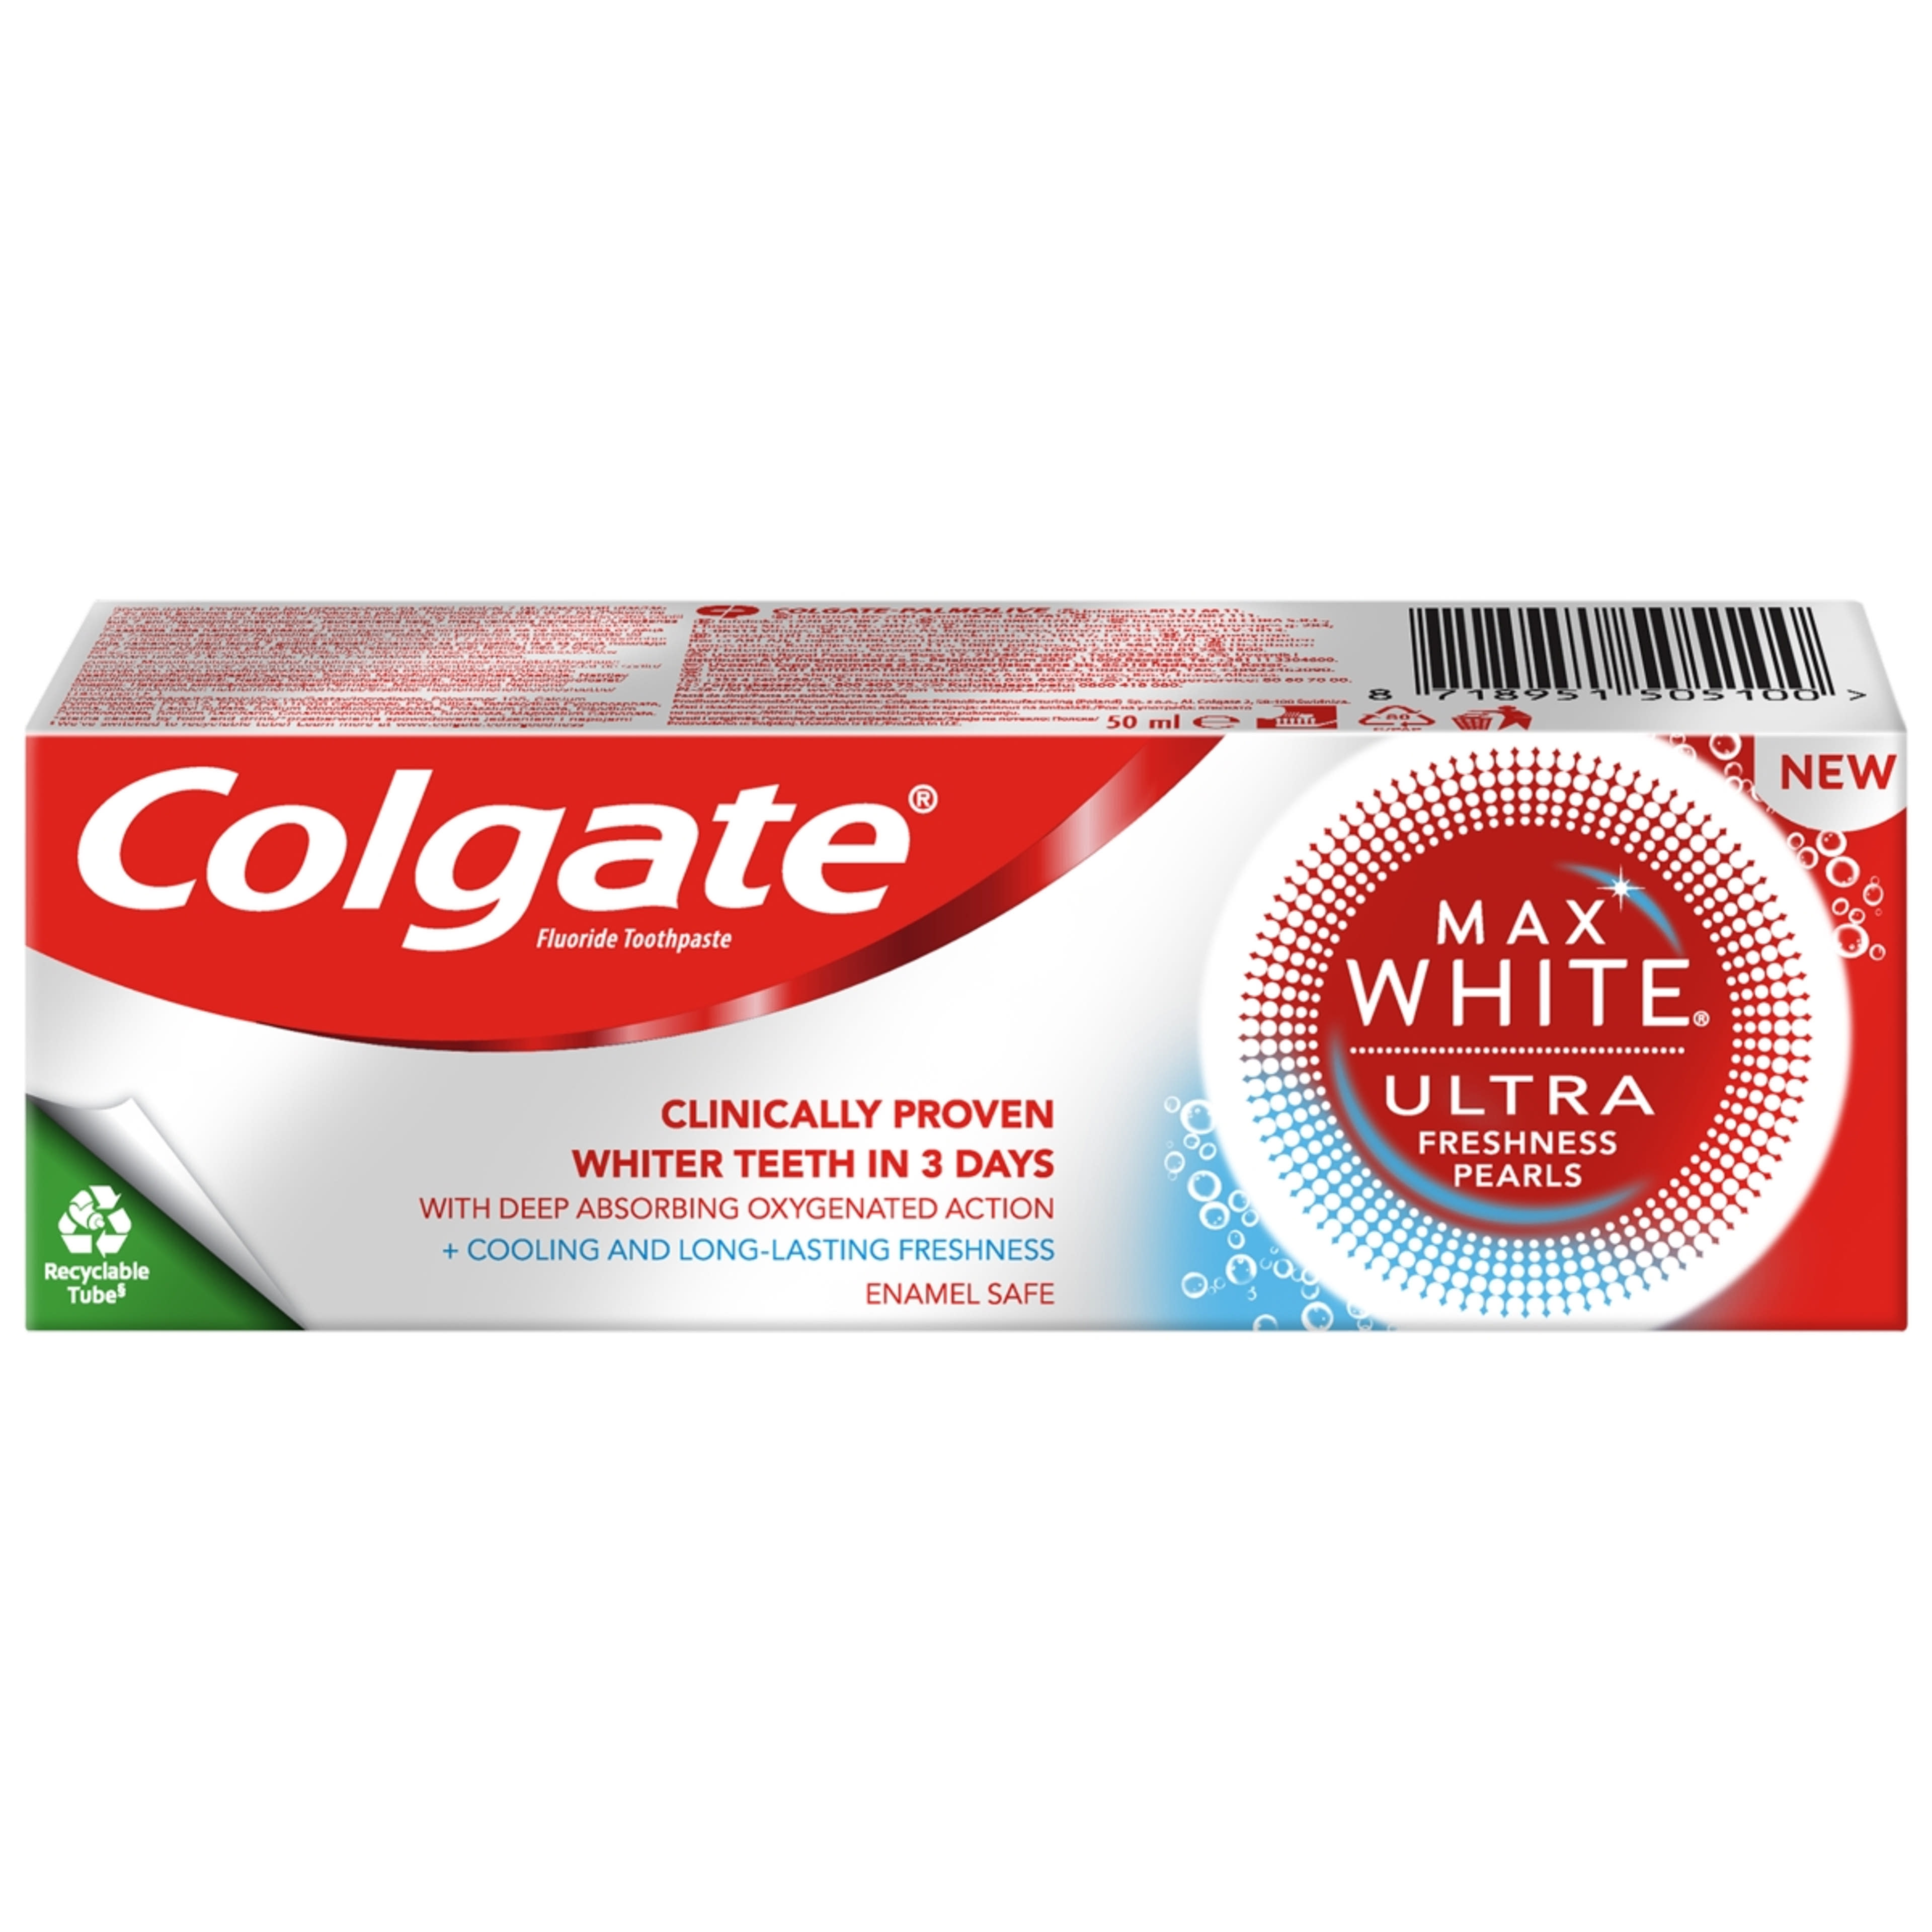 Colgate Max White Ultra Freshness Pearls fehérítő fogkrém - 50 ml